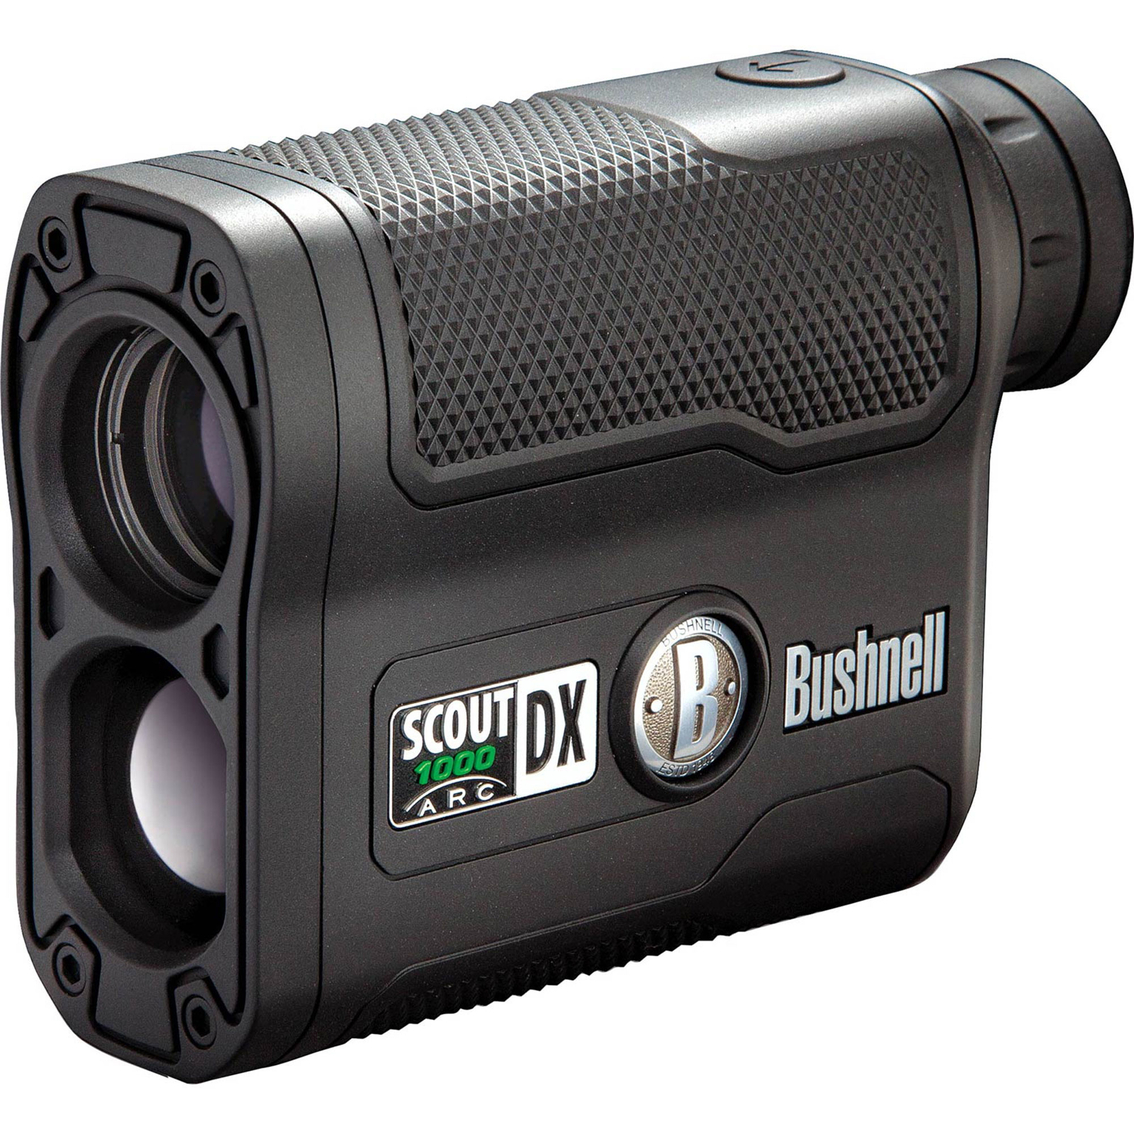 Bushnell Scout Dx 1000 Arc Laser Rangefinder | Scopes & Binoculars